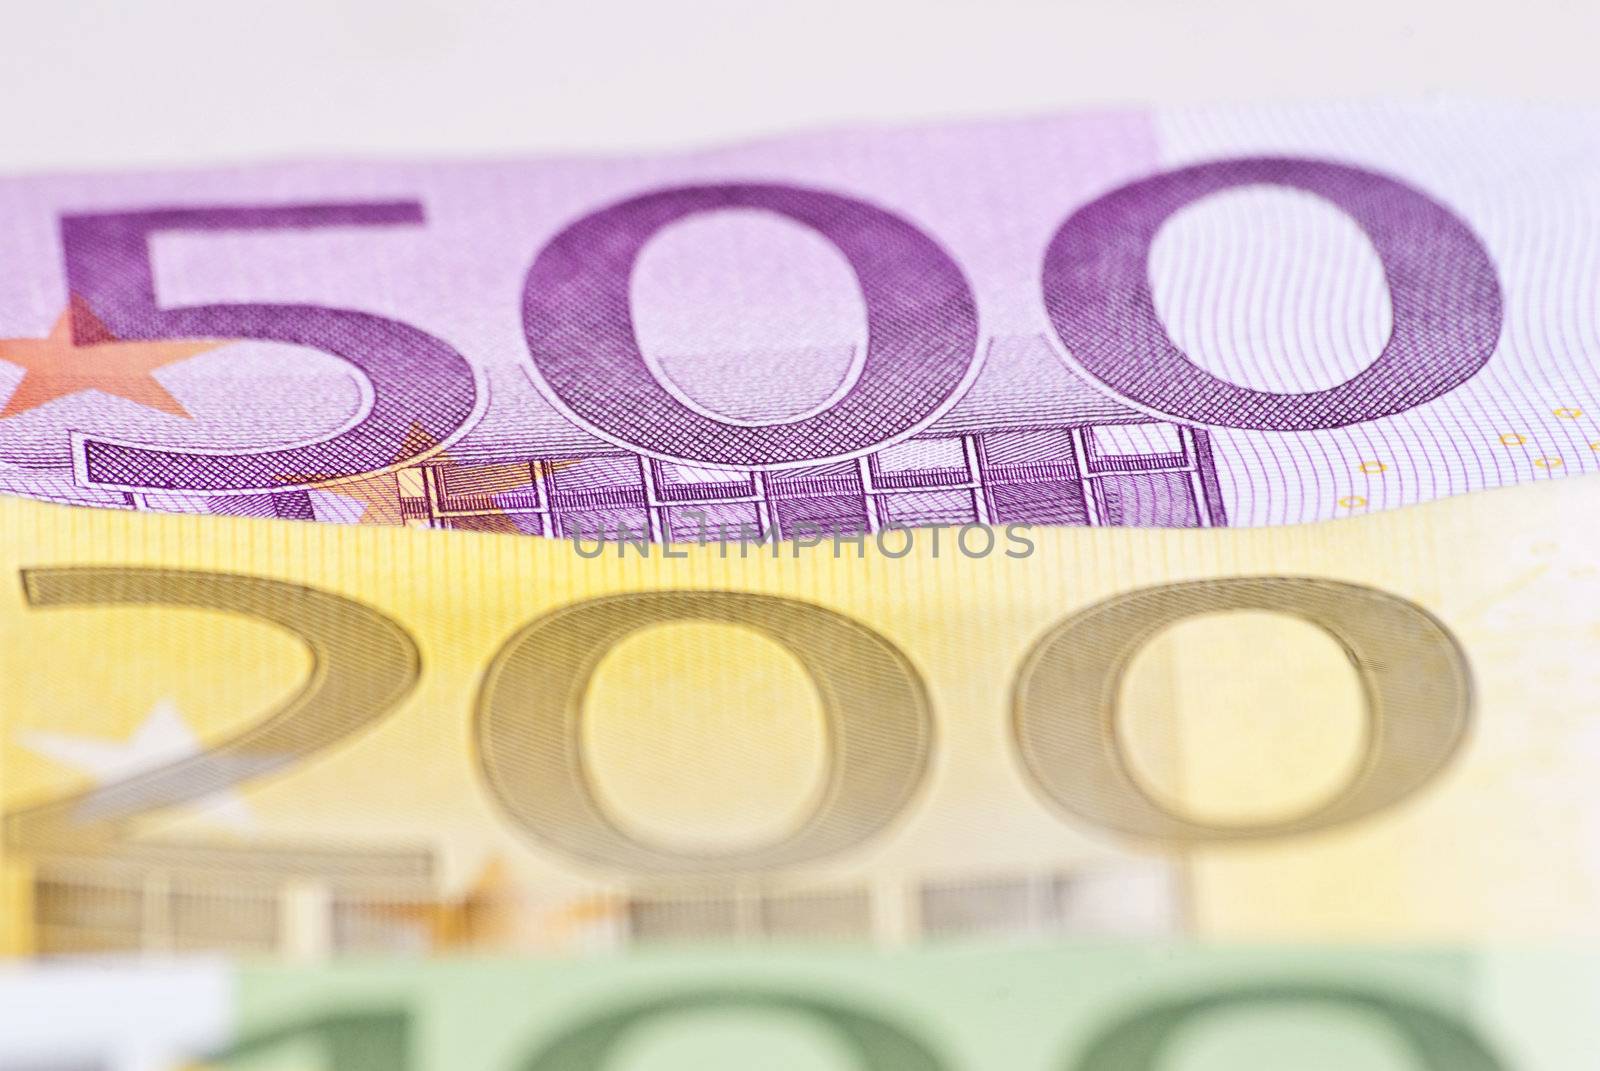 500 Euro Money Macro by adamr